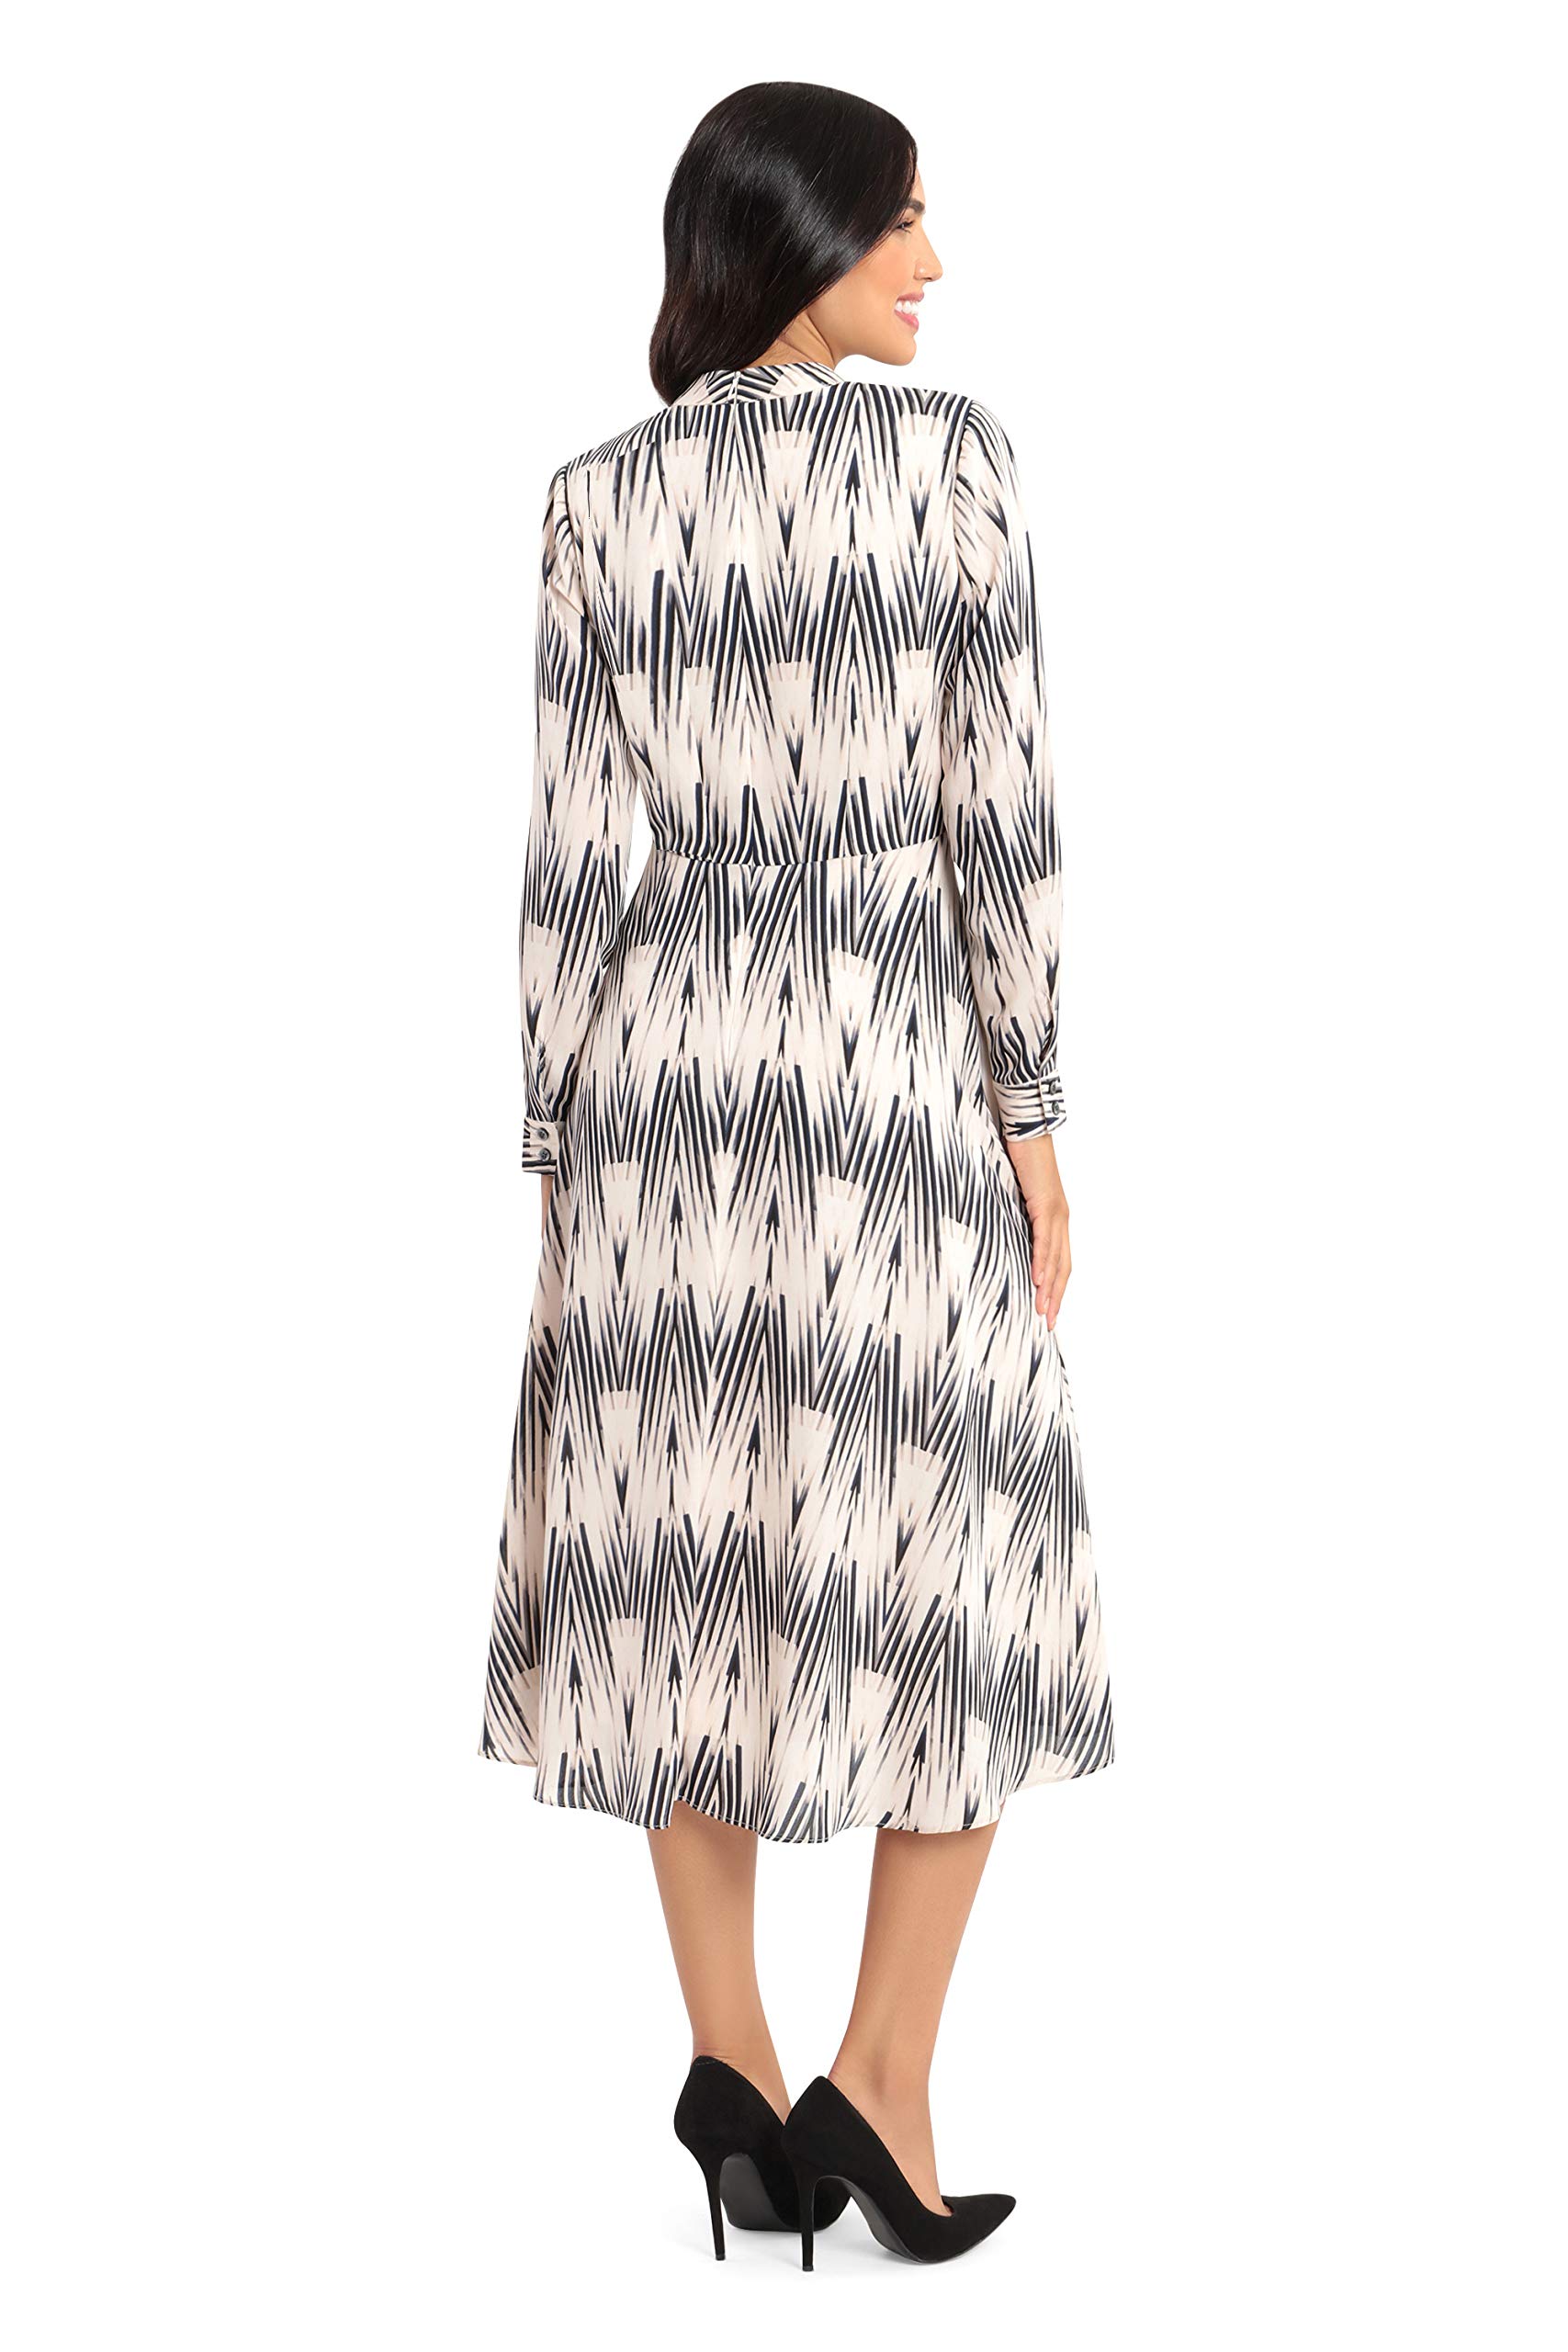 Maggy London Women's Printed Abstract Chevron Cuff Long Sleeve Collar Neck Side Cascade Tea Dress